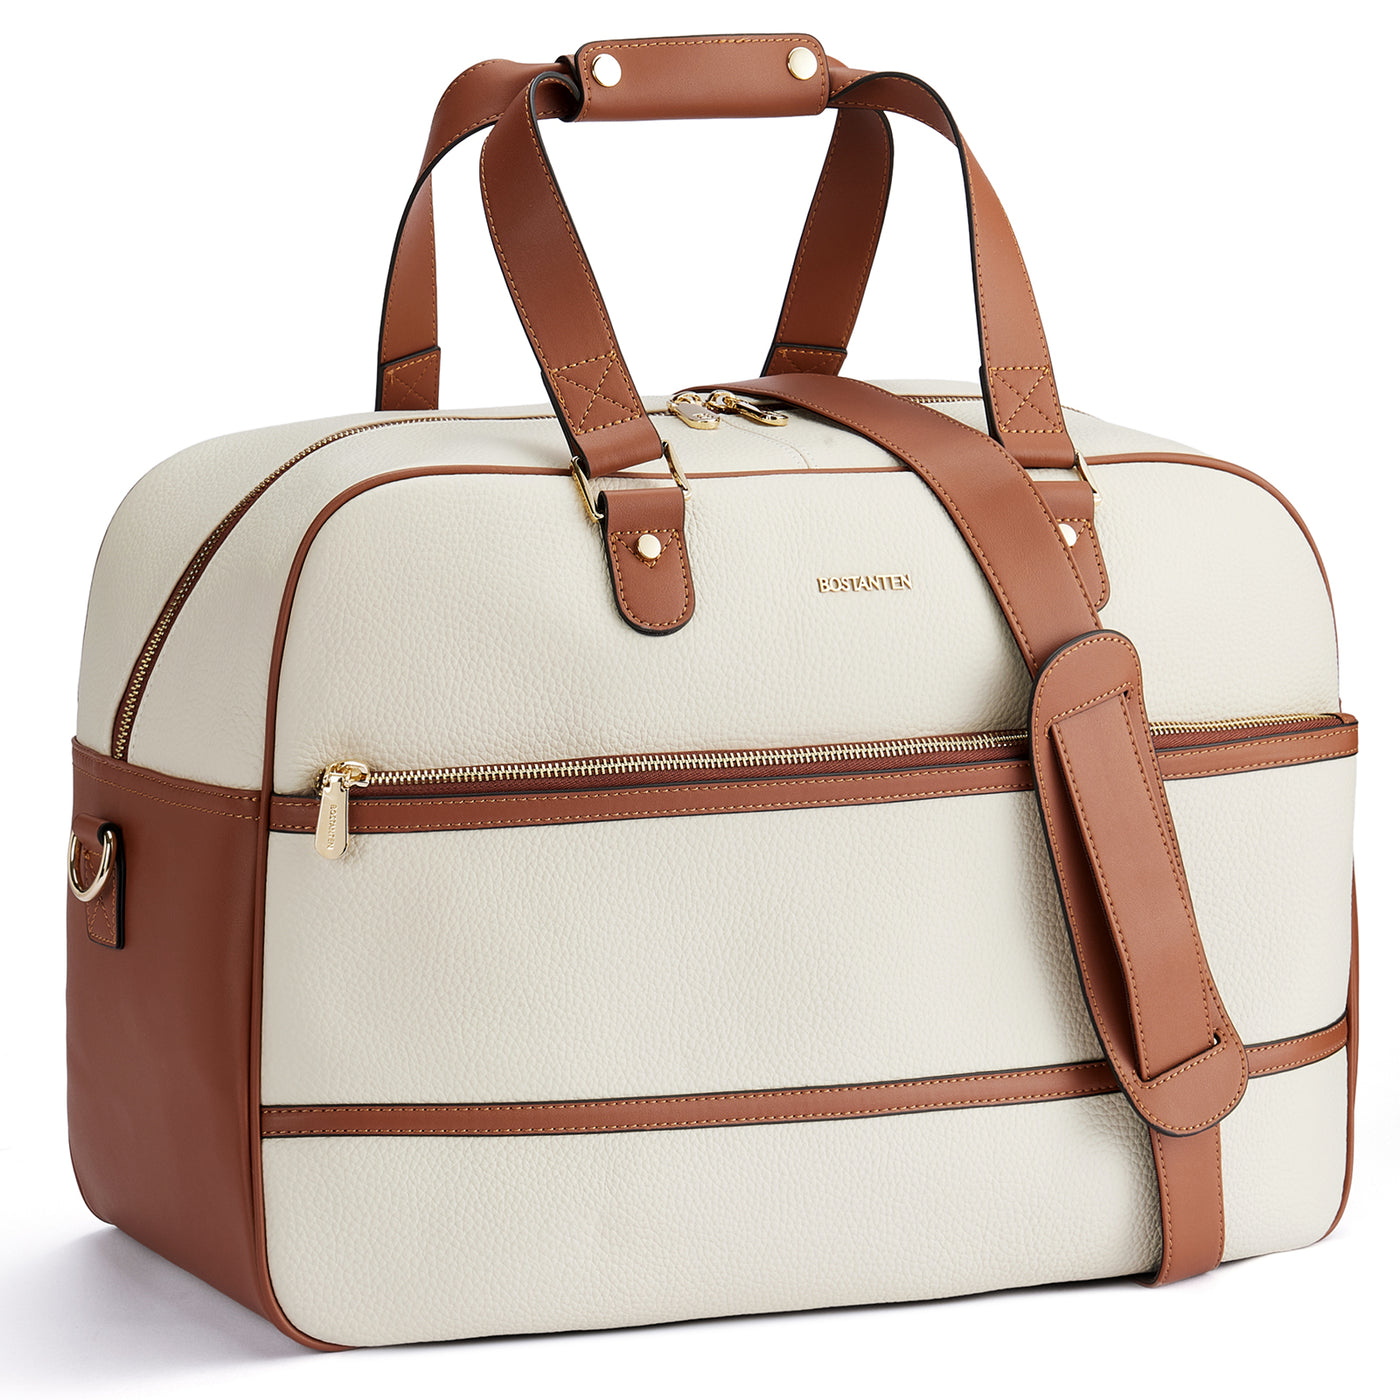 Weekender Bag Women | Duffle Bag For Women | Overnight Bag | Travel Bag |  Canvas Weekender Bag